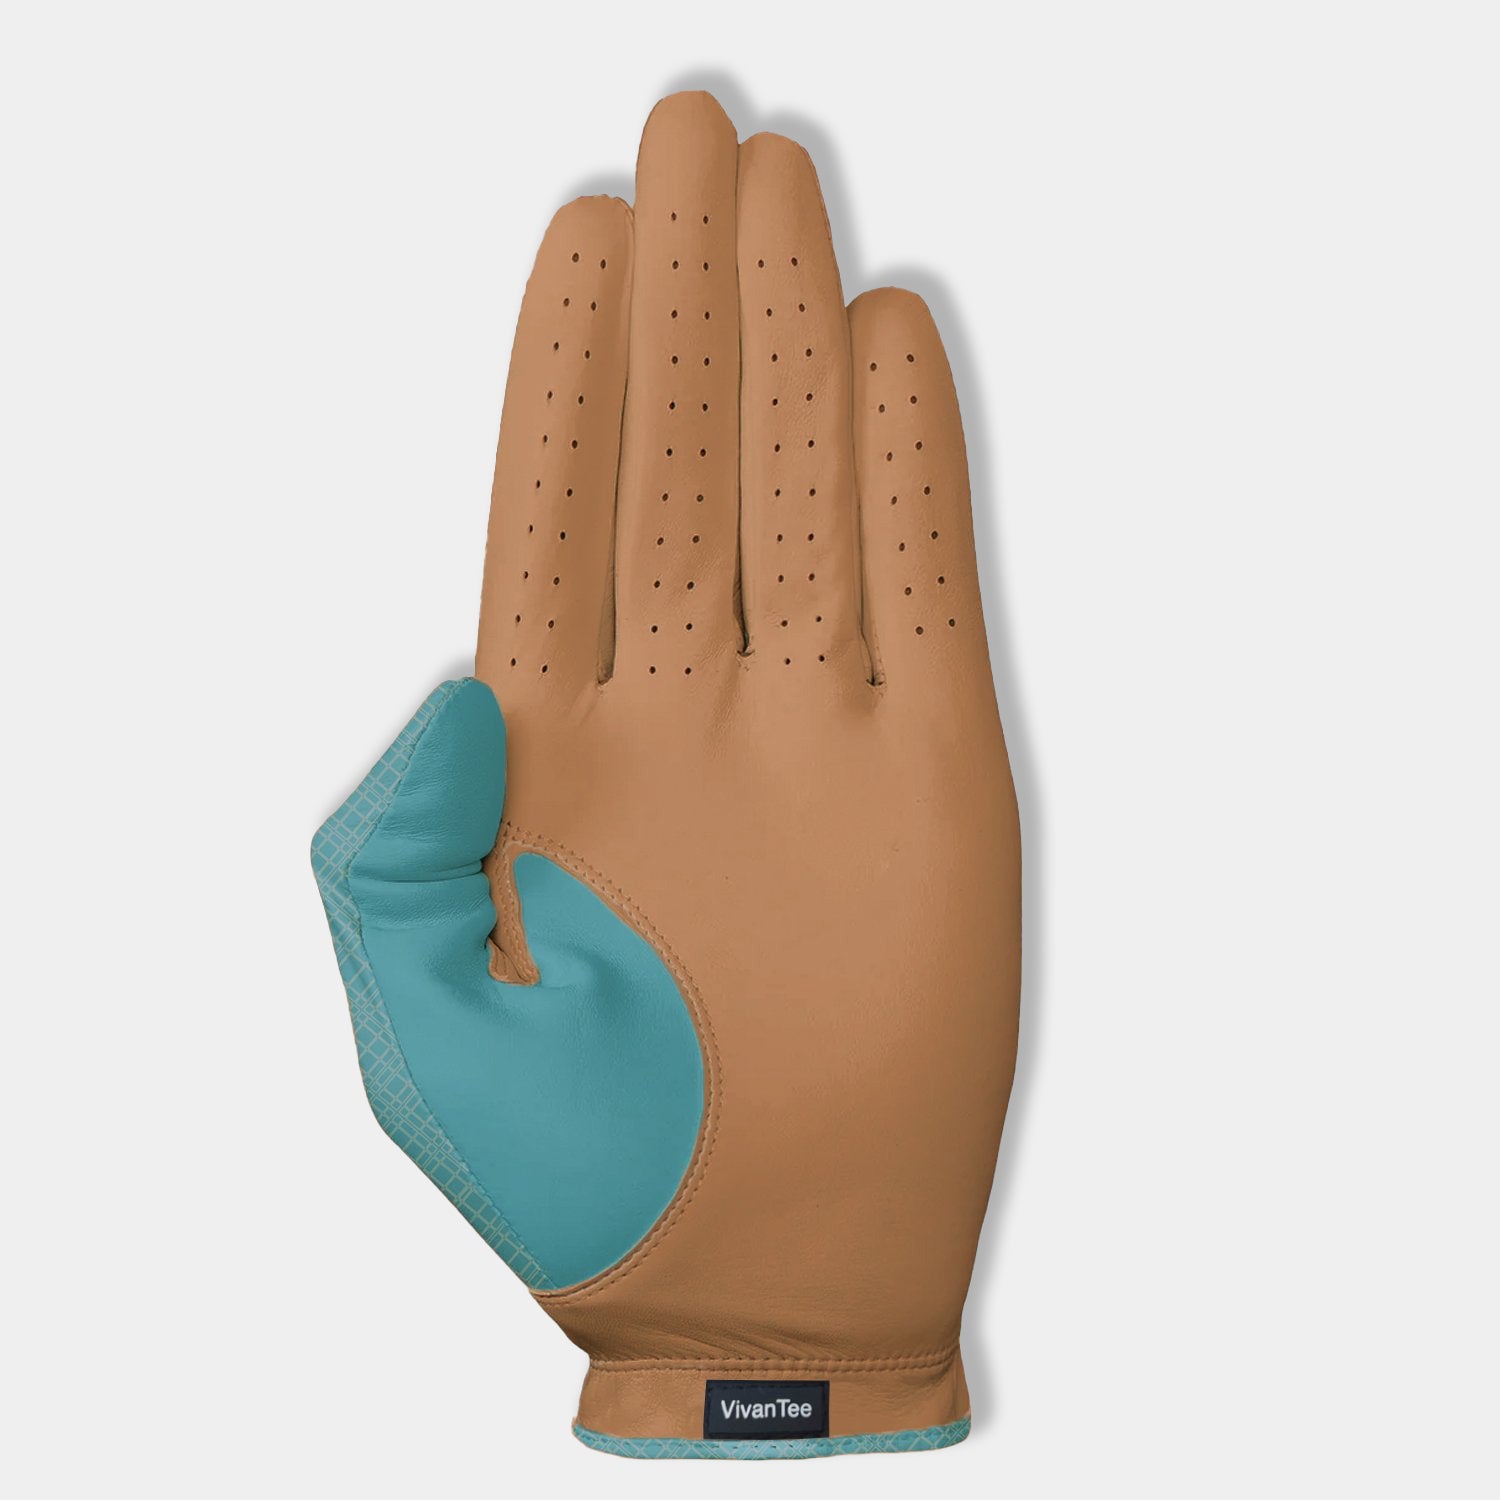 Orange and blue golf glove bottom showing palm for men.